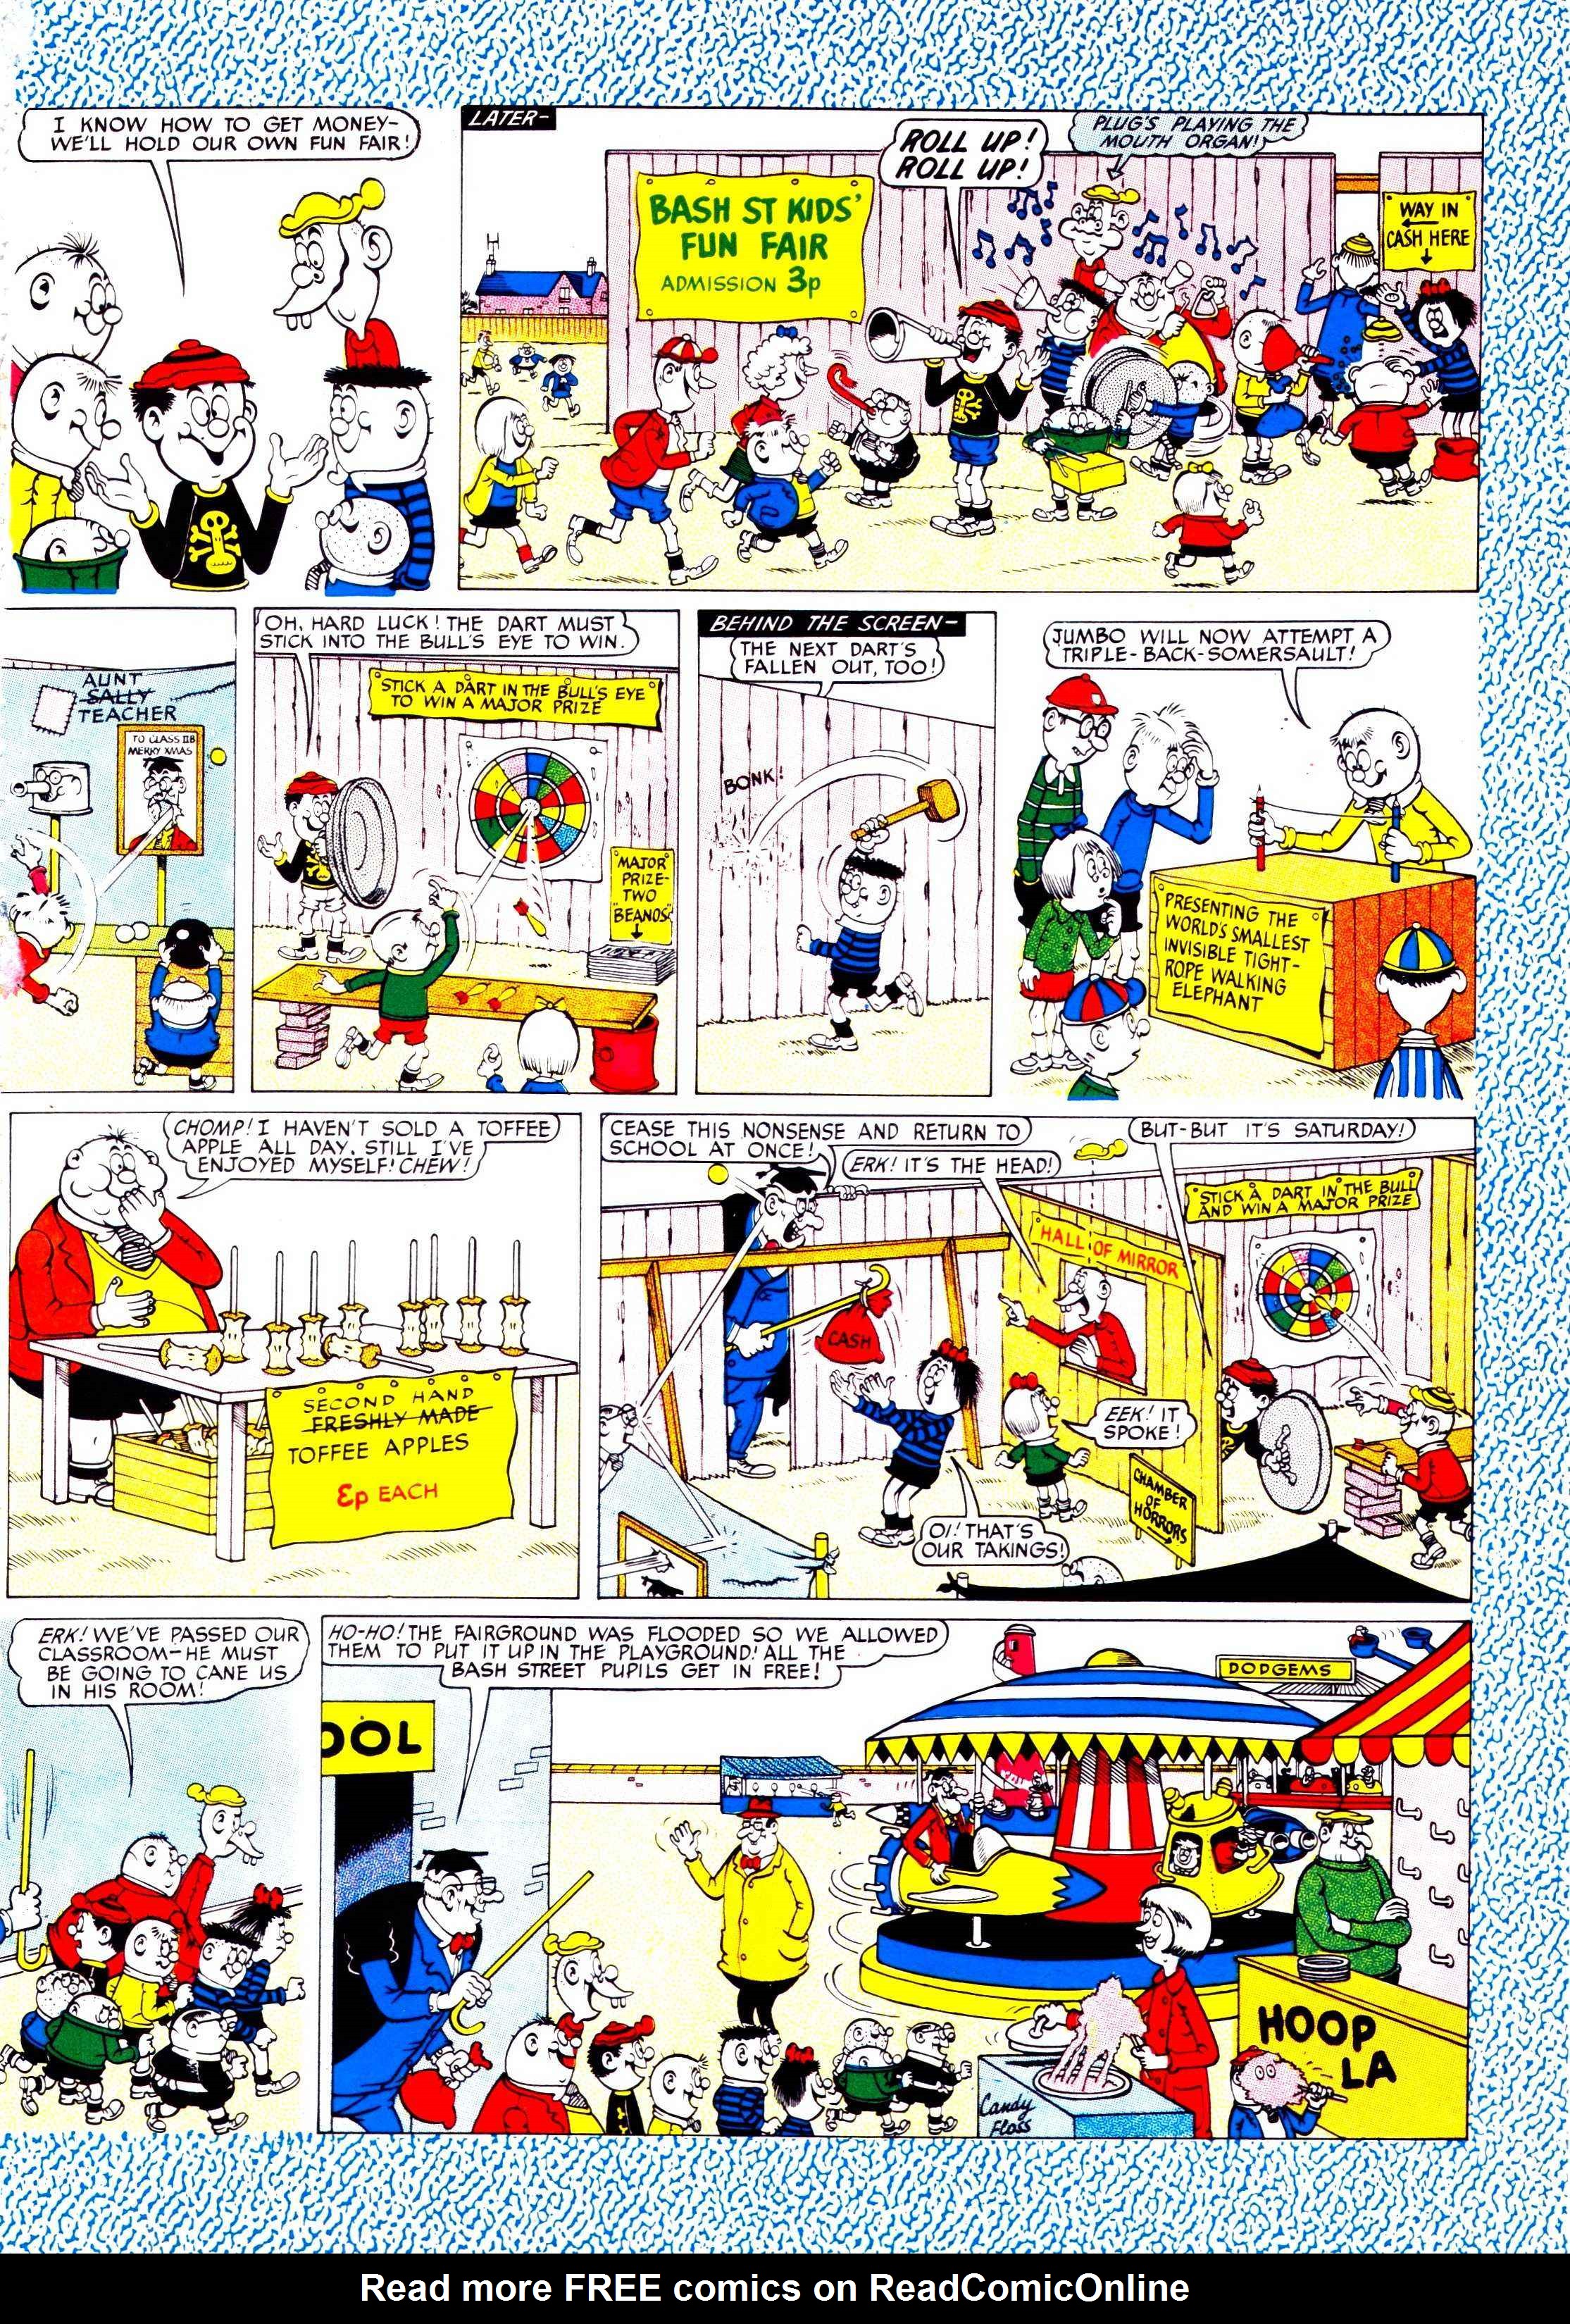 Read online Bash Street Kids comic -  Issue #1982 - 87